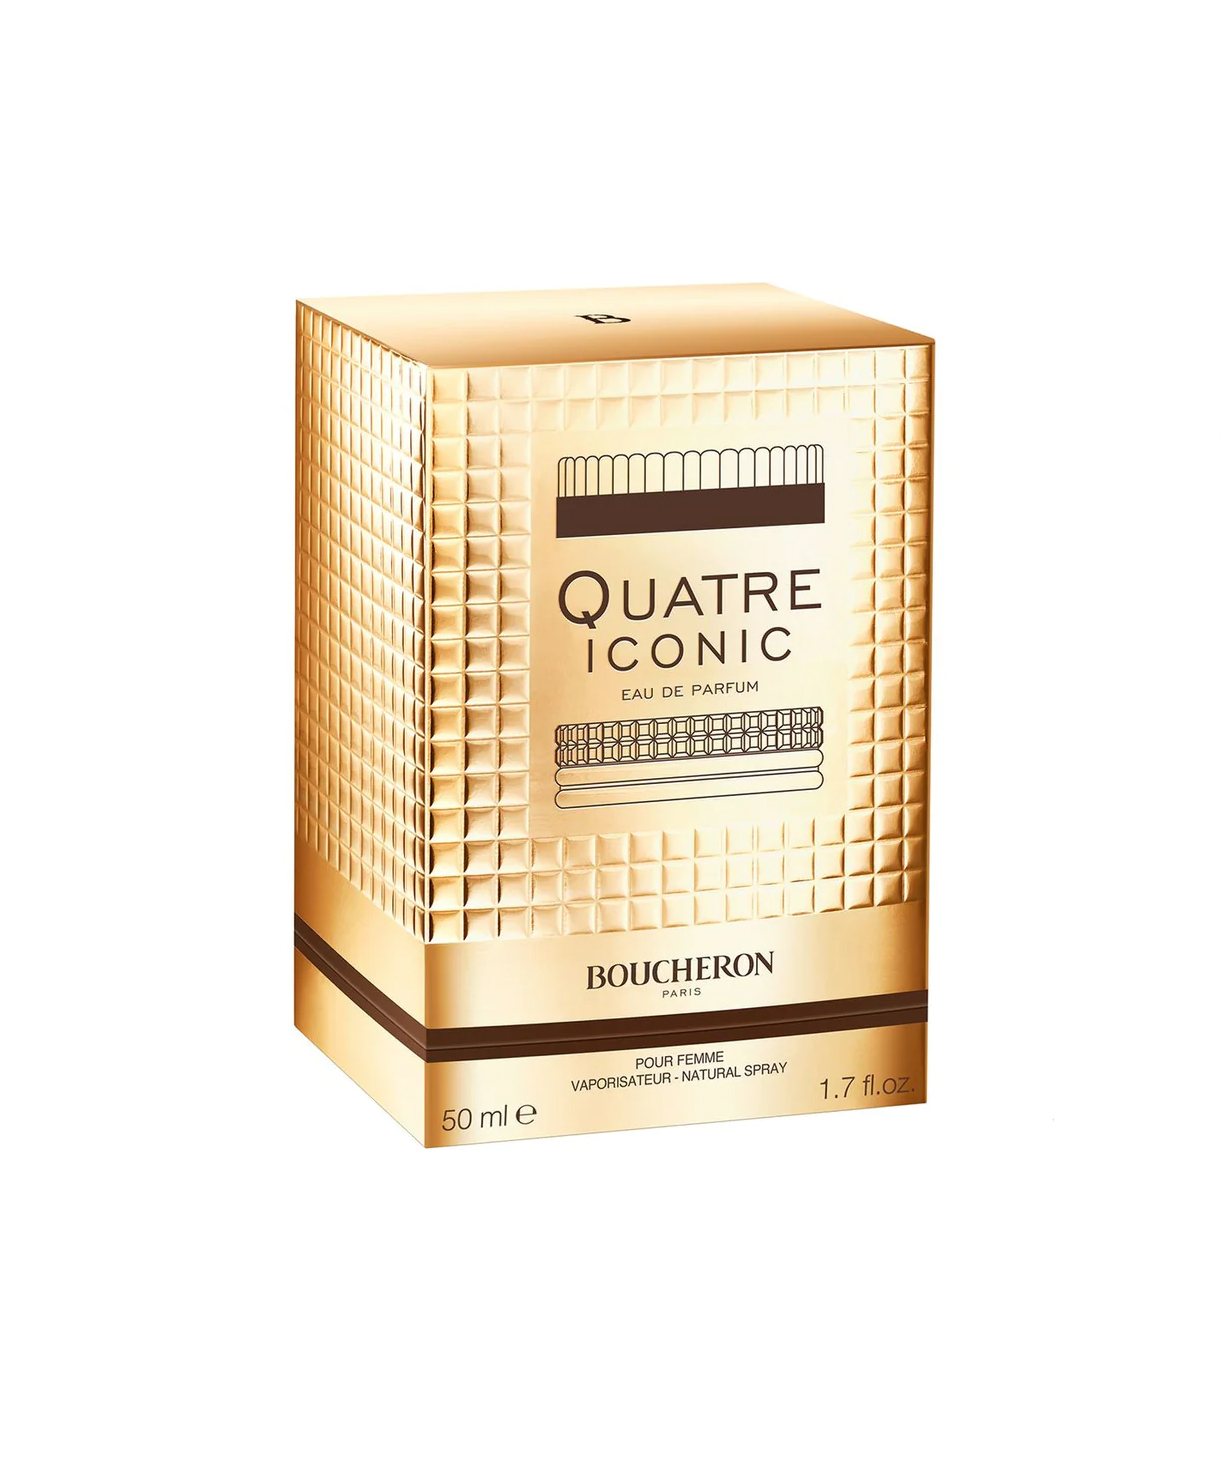 Perfume «Boucheron» Quatre Iconic, for women, 50 ml